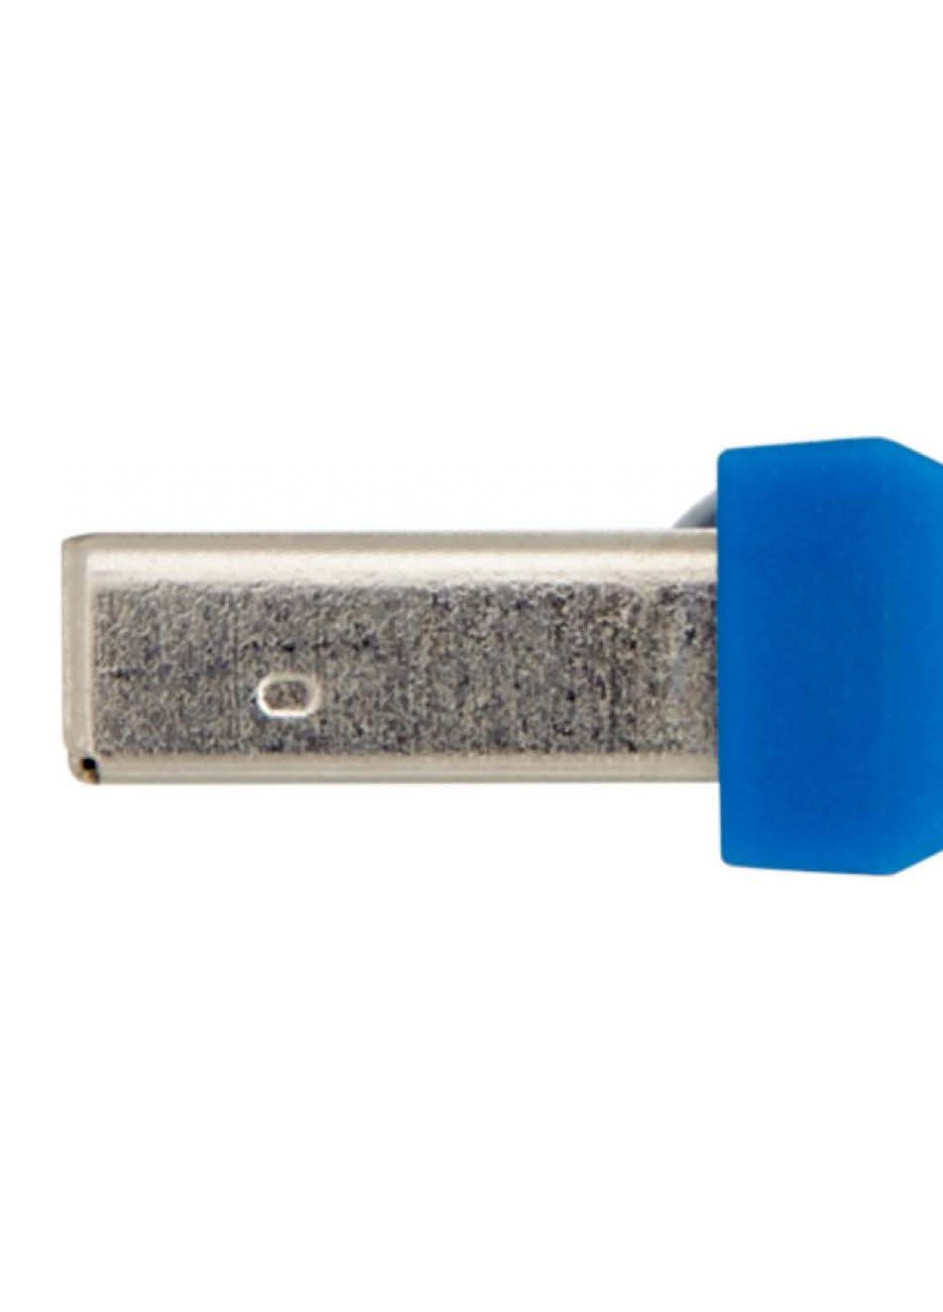 USB флеш накопитель (98711) Verbatim 64gb store 'n' stay nano blue usb 3.0 (232750189)